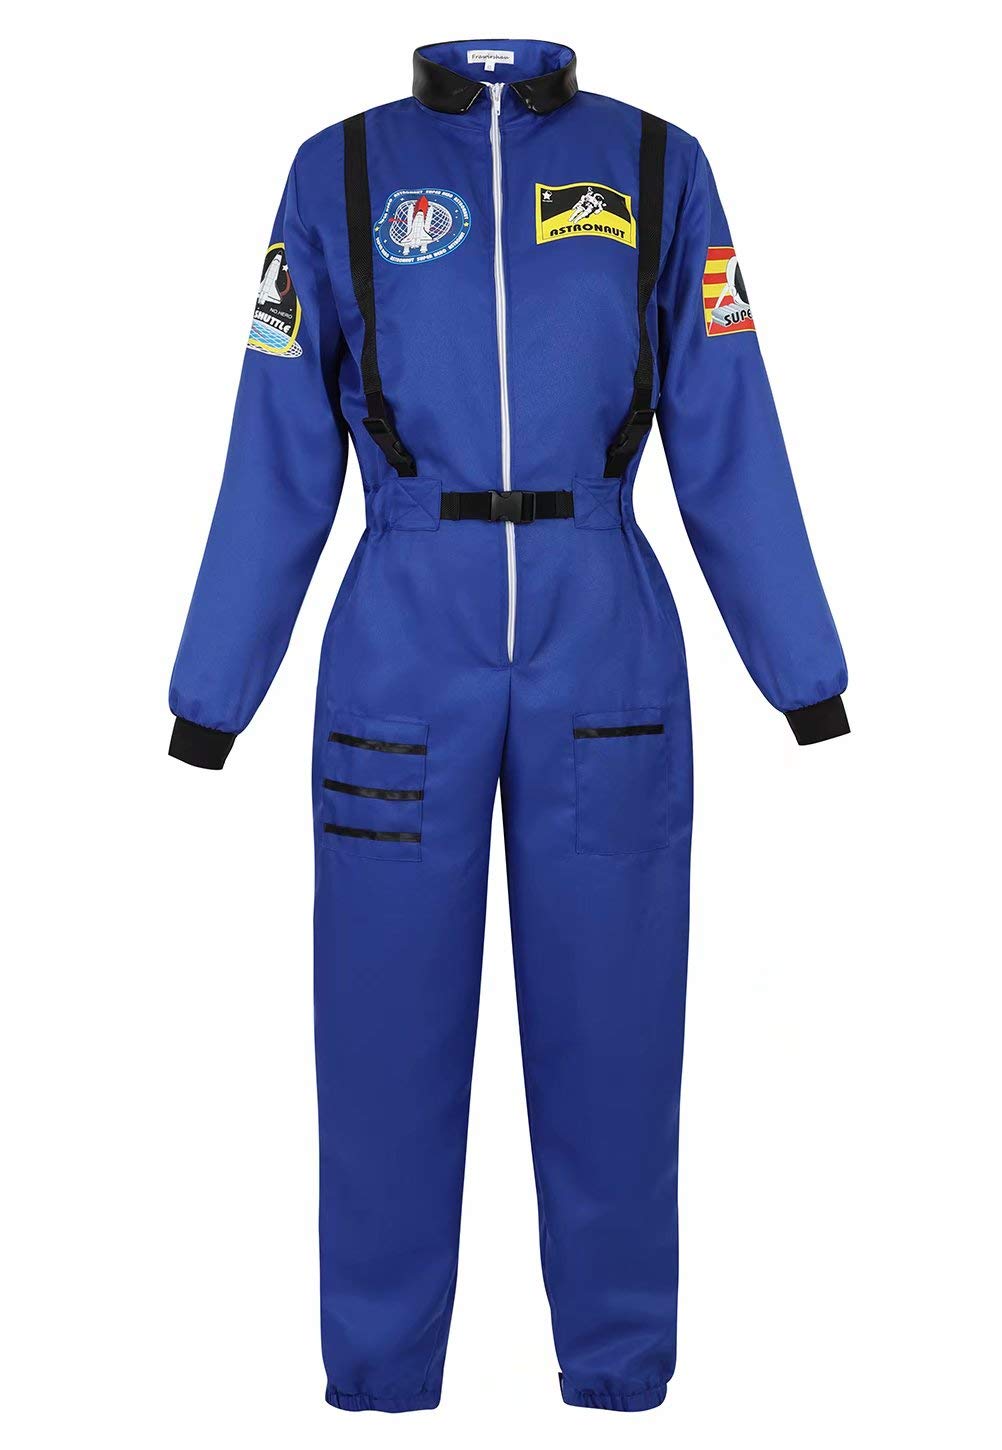 Josamogre Astronauten Kostüm Erwachsene Damen Kostüm Astronau Anzugt Weltraum Raumfahrer Cosplay Halloween Blau 2XL